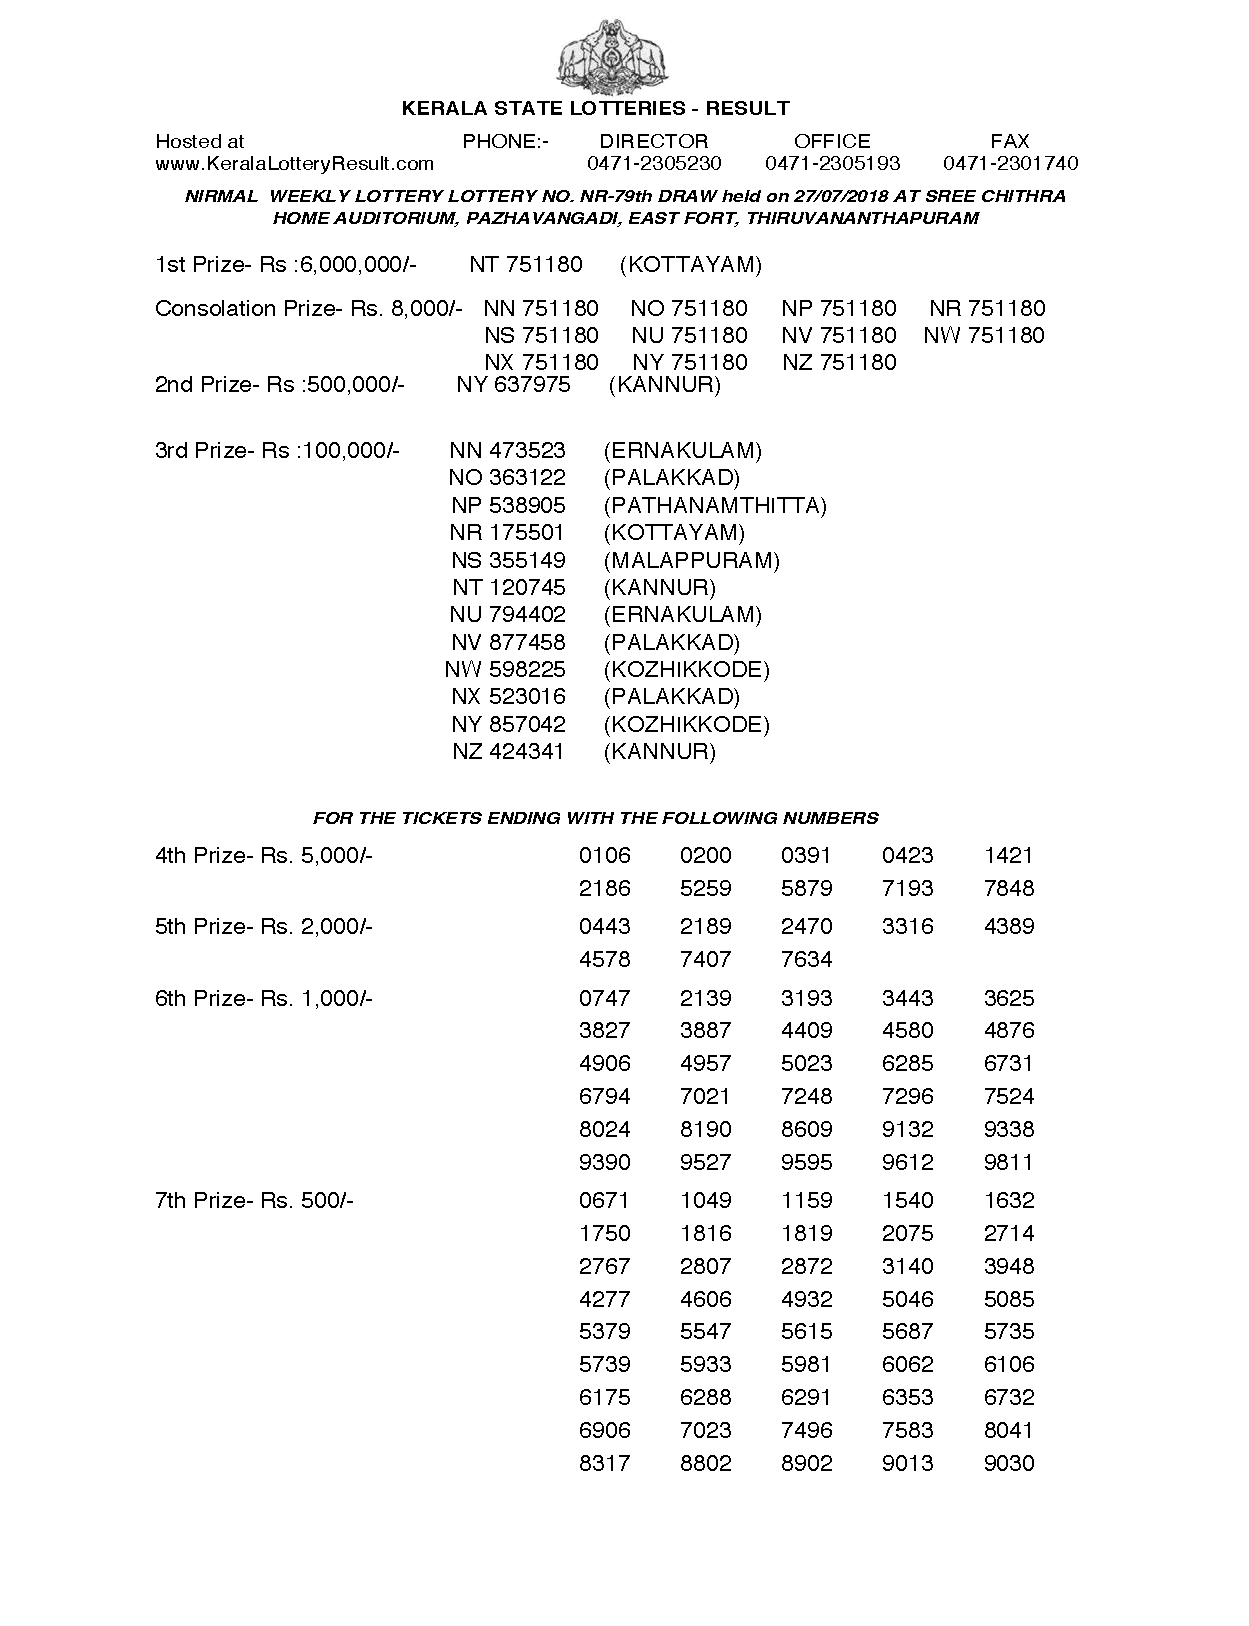 Nirmal NR79 Kerala Lottery Results Screenshot: Page 1